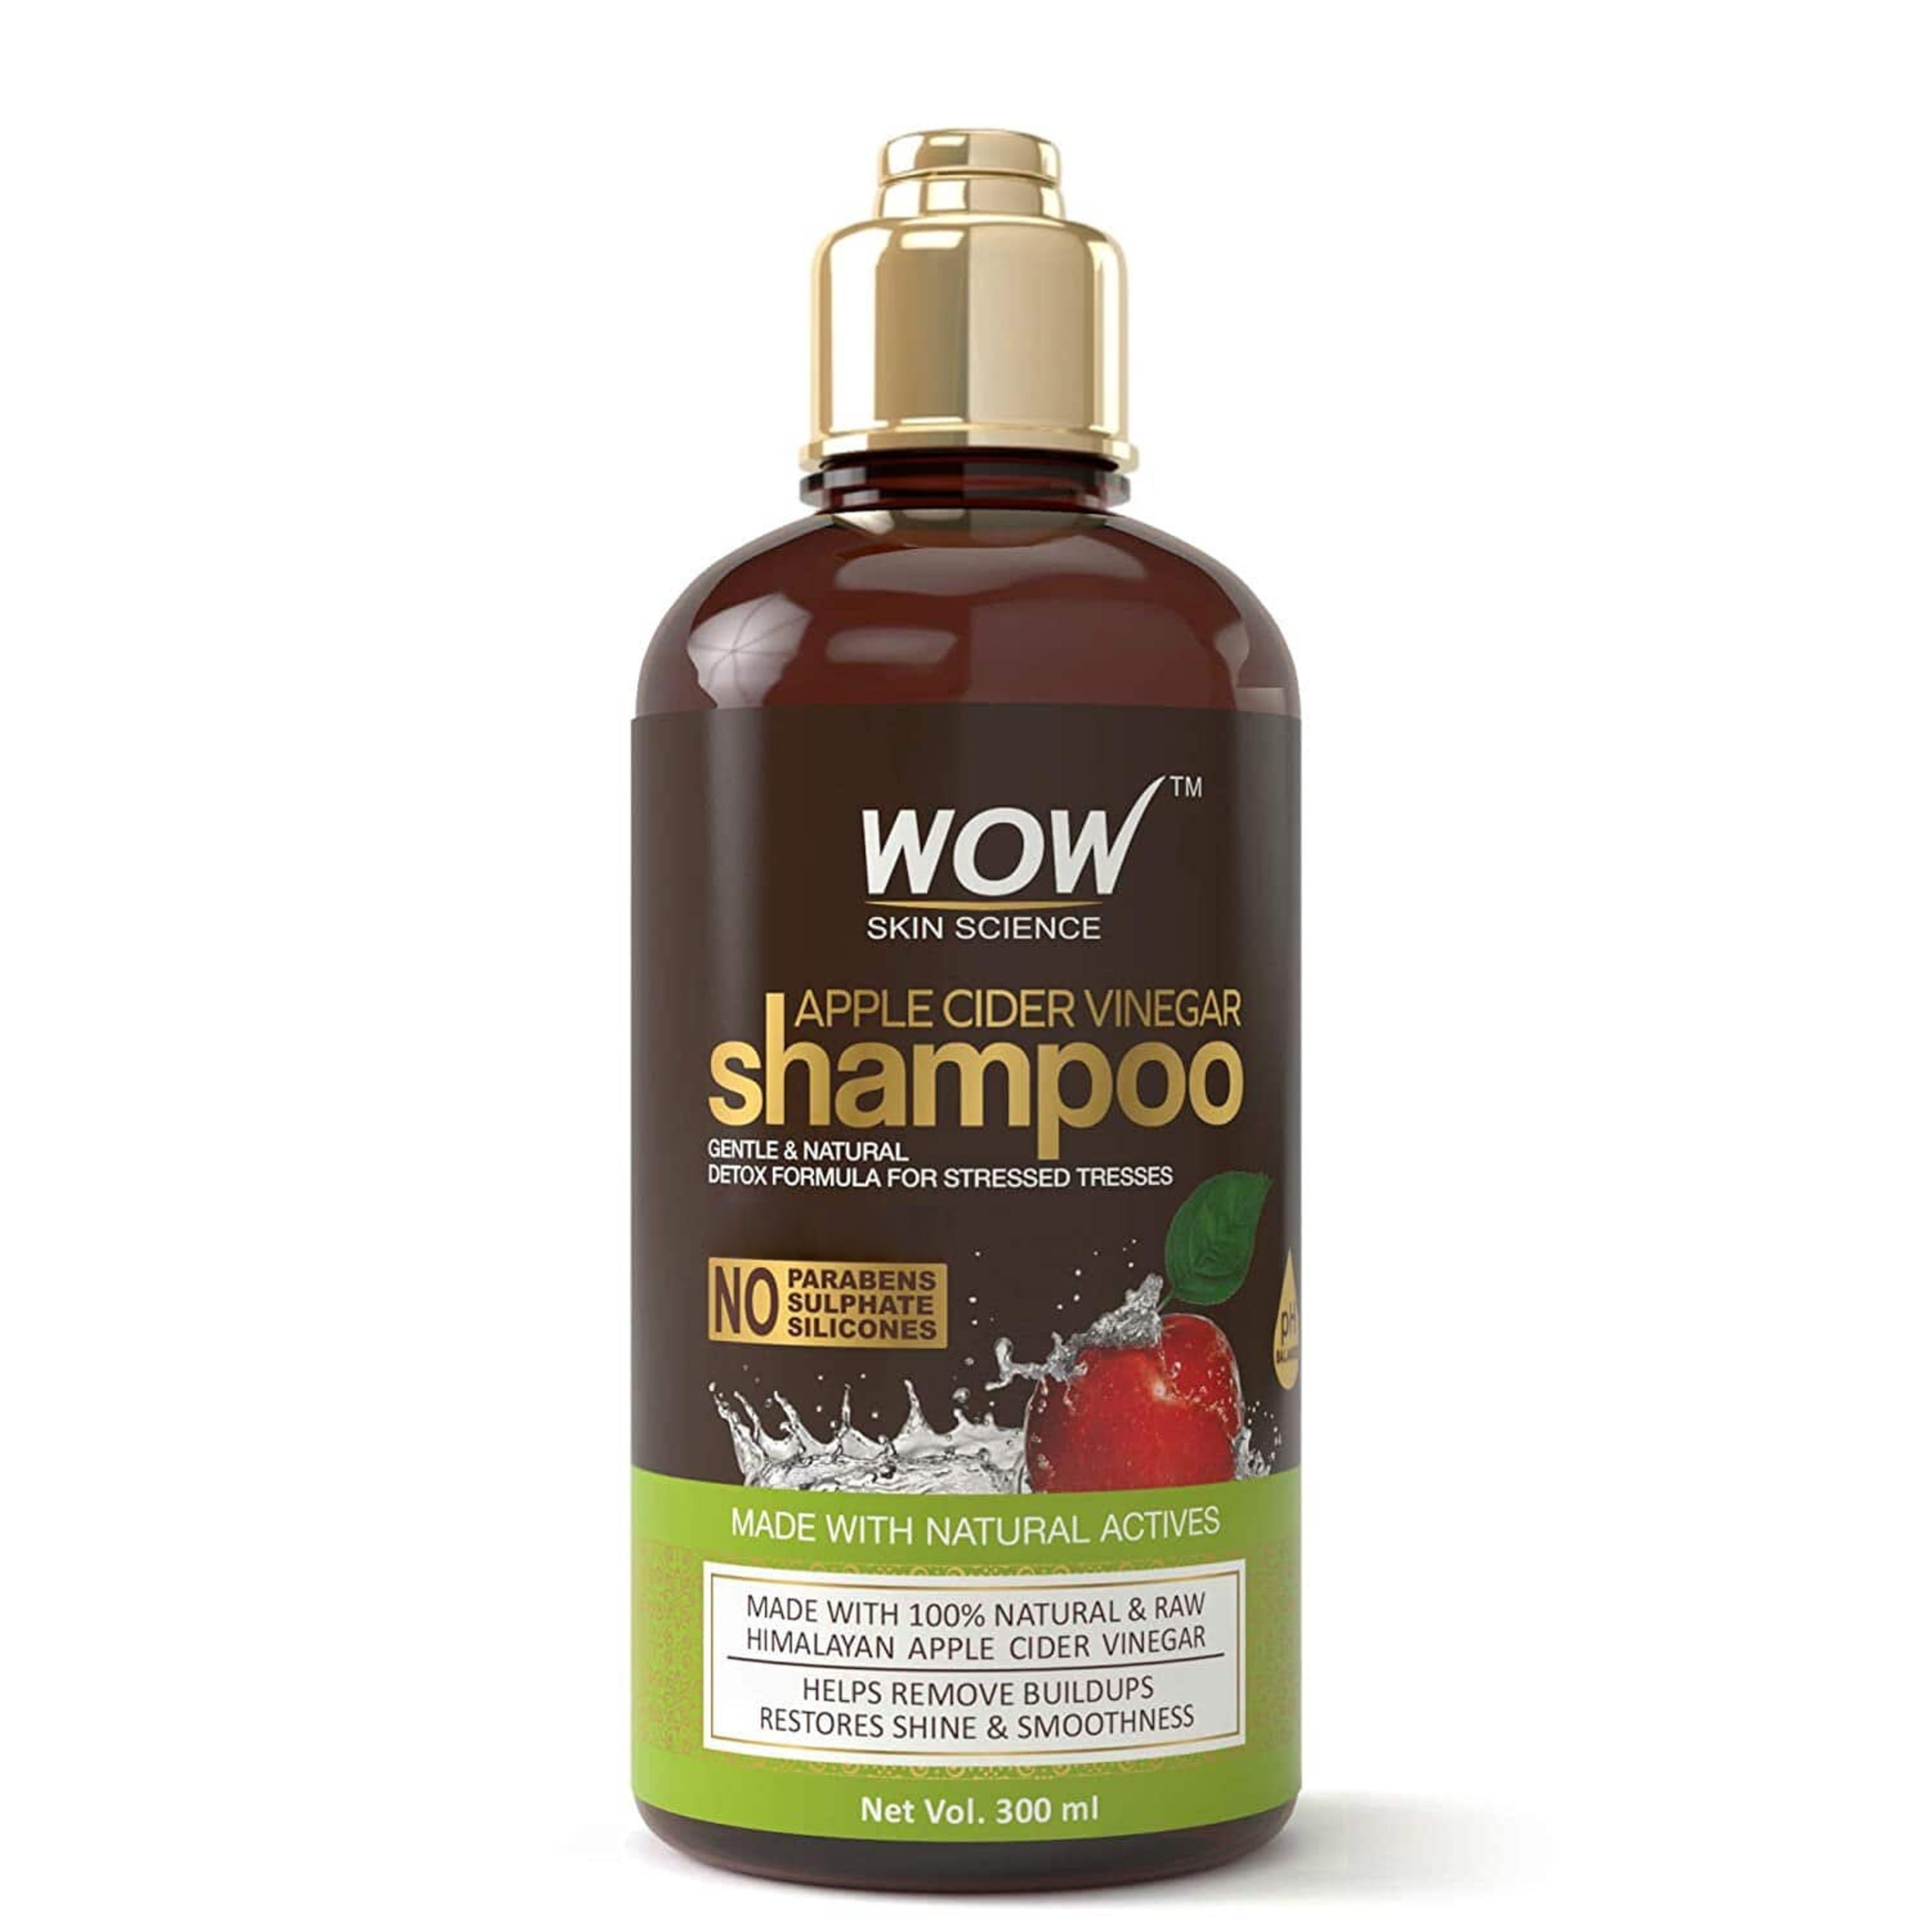 WOW Skin Science Apple Cider Vinegar Shampoo, 300 mL 